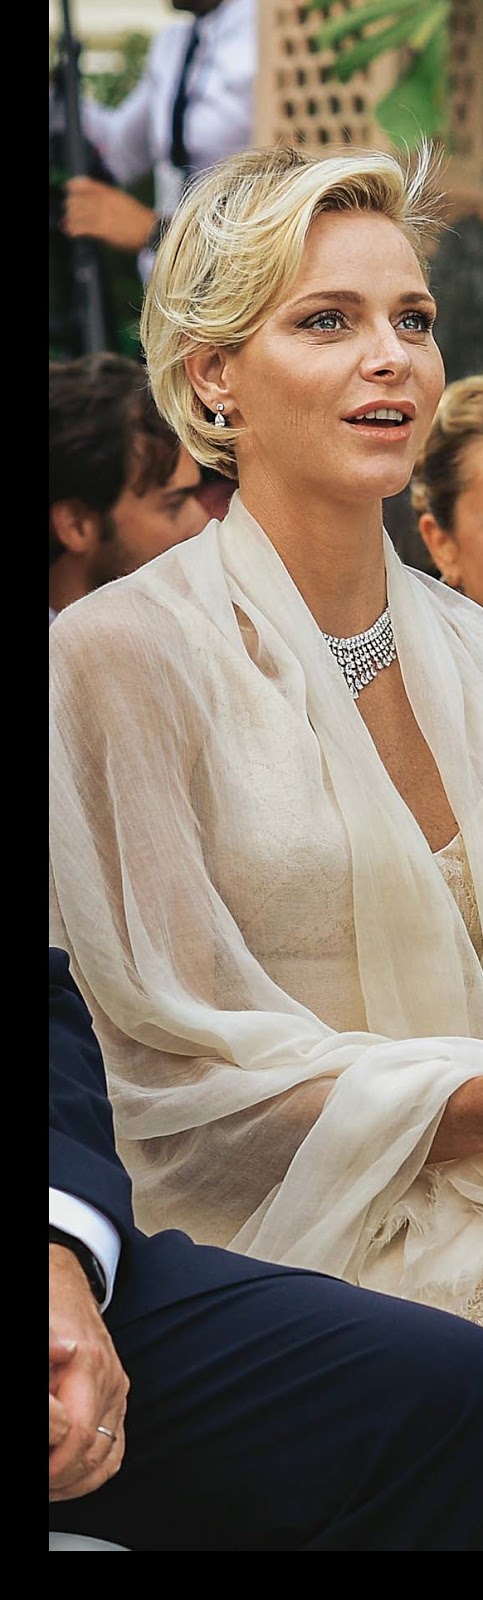 Princess Charlene in Graff Diamond necklace Gareth Wittstock Wedding